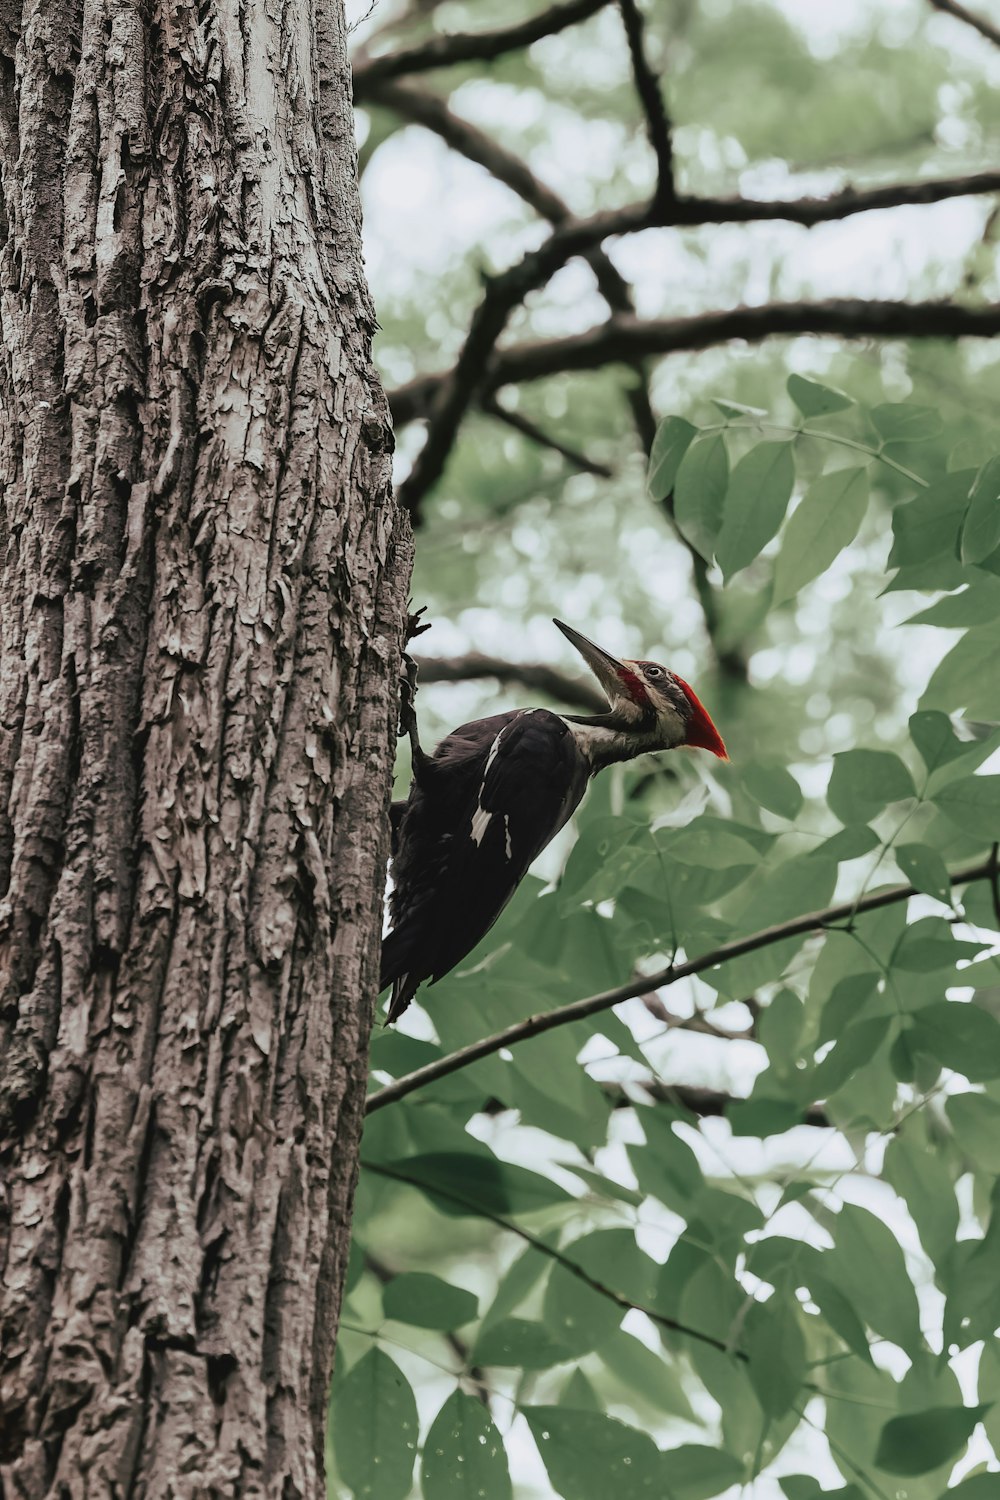 a bird with a long beak standing on a tree